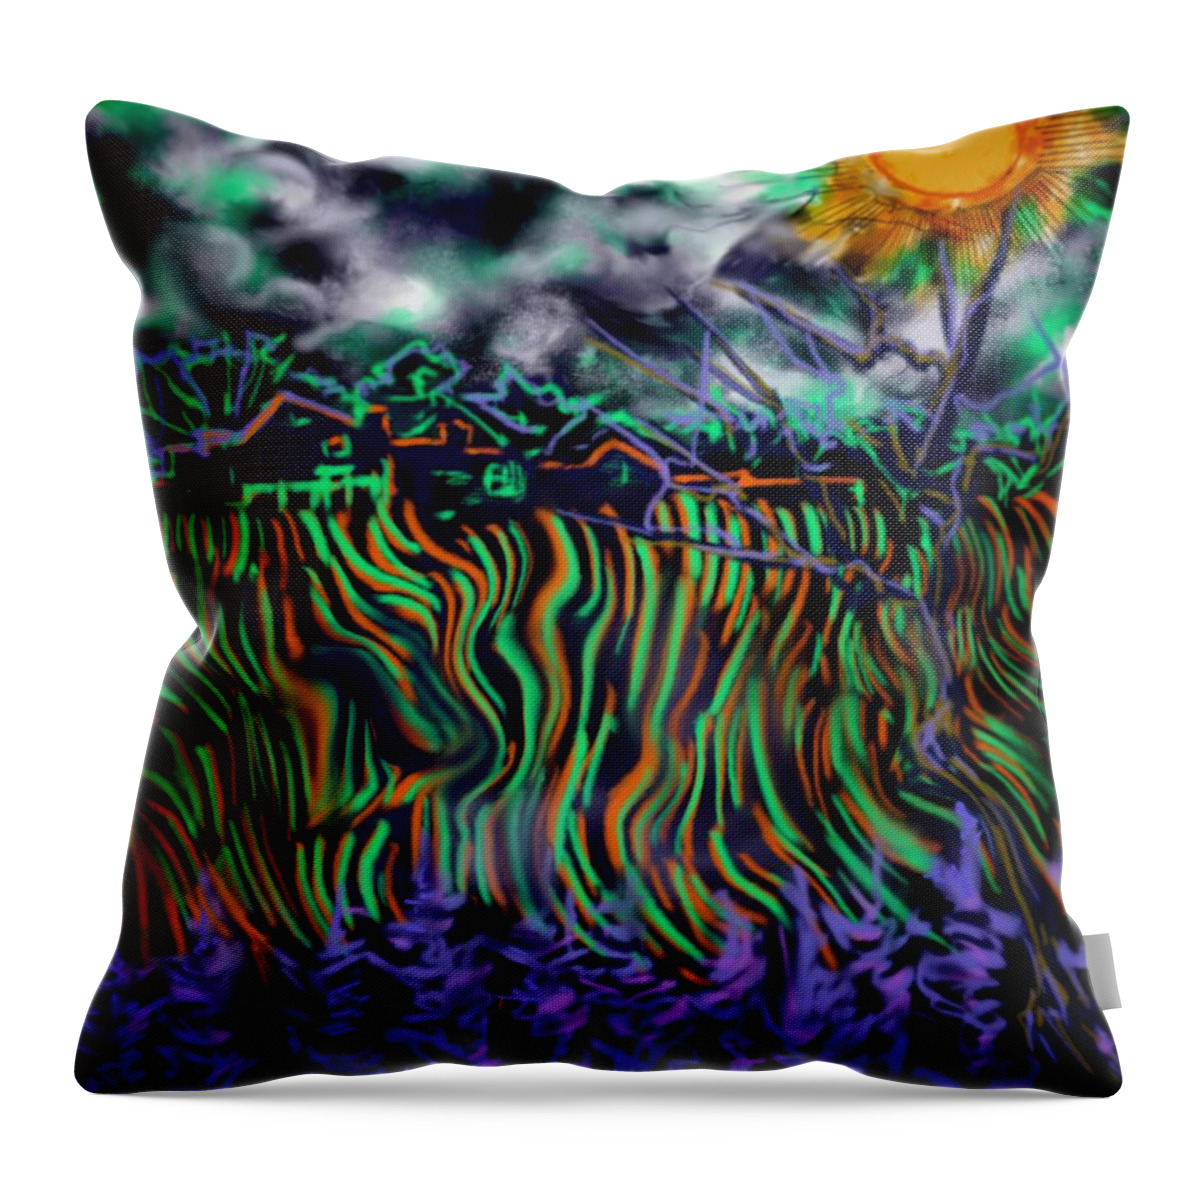 Midnight Sun Throw Pillow featuring the digital art Midnight Sun by Angela Weddle